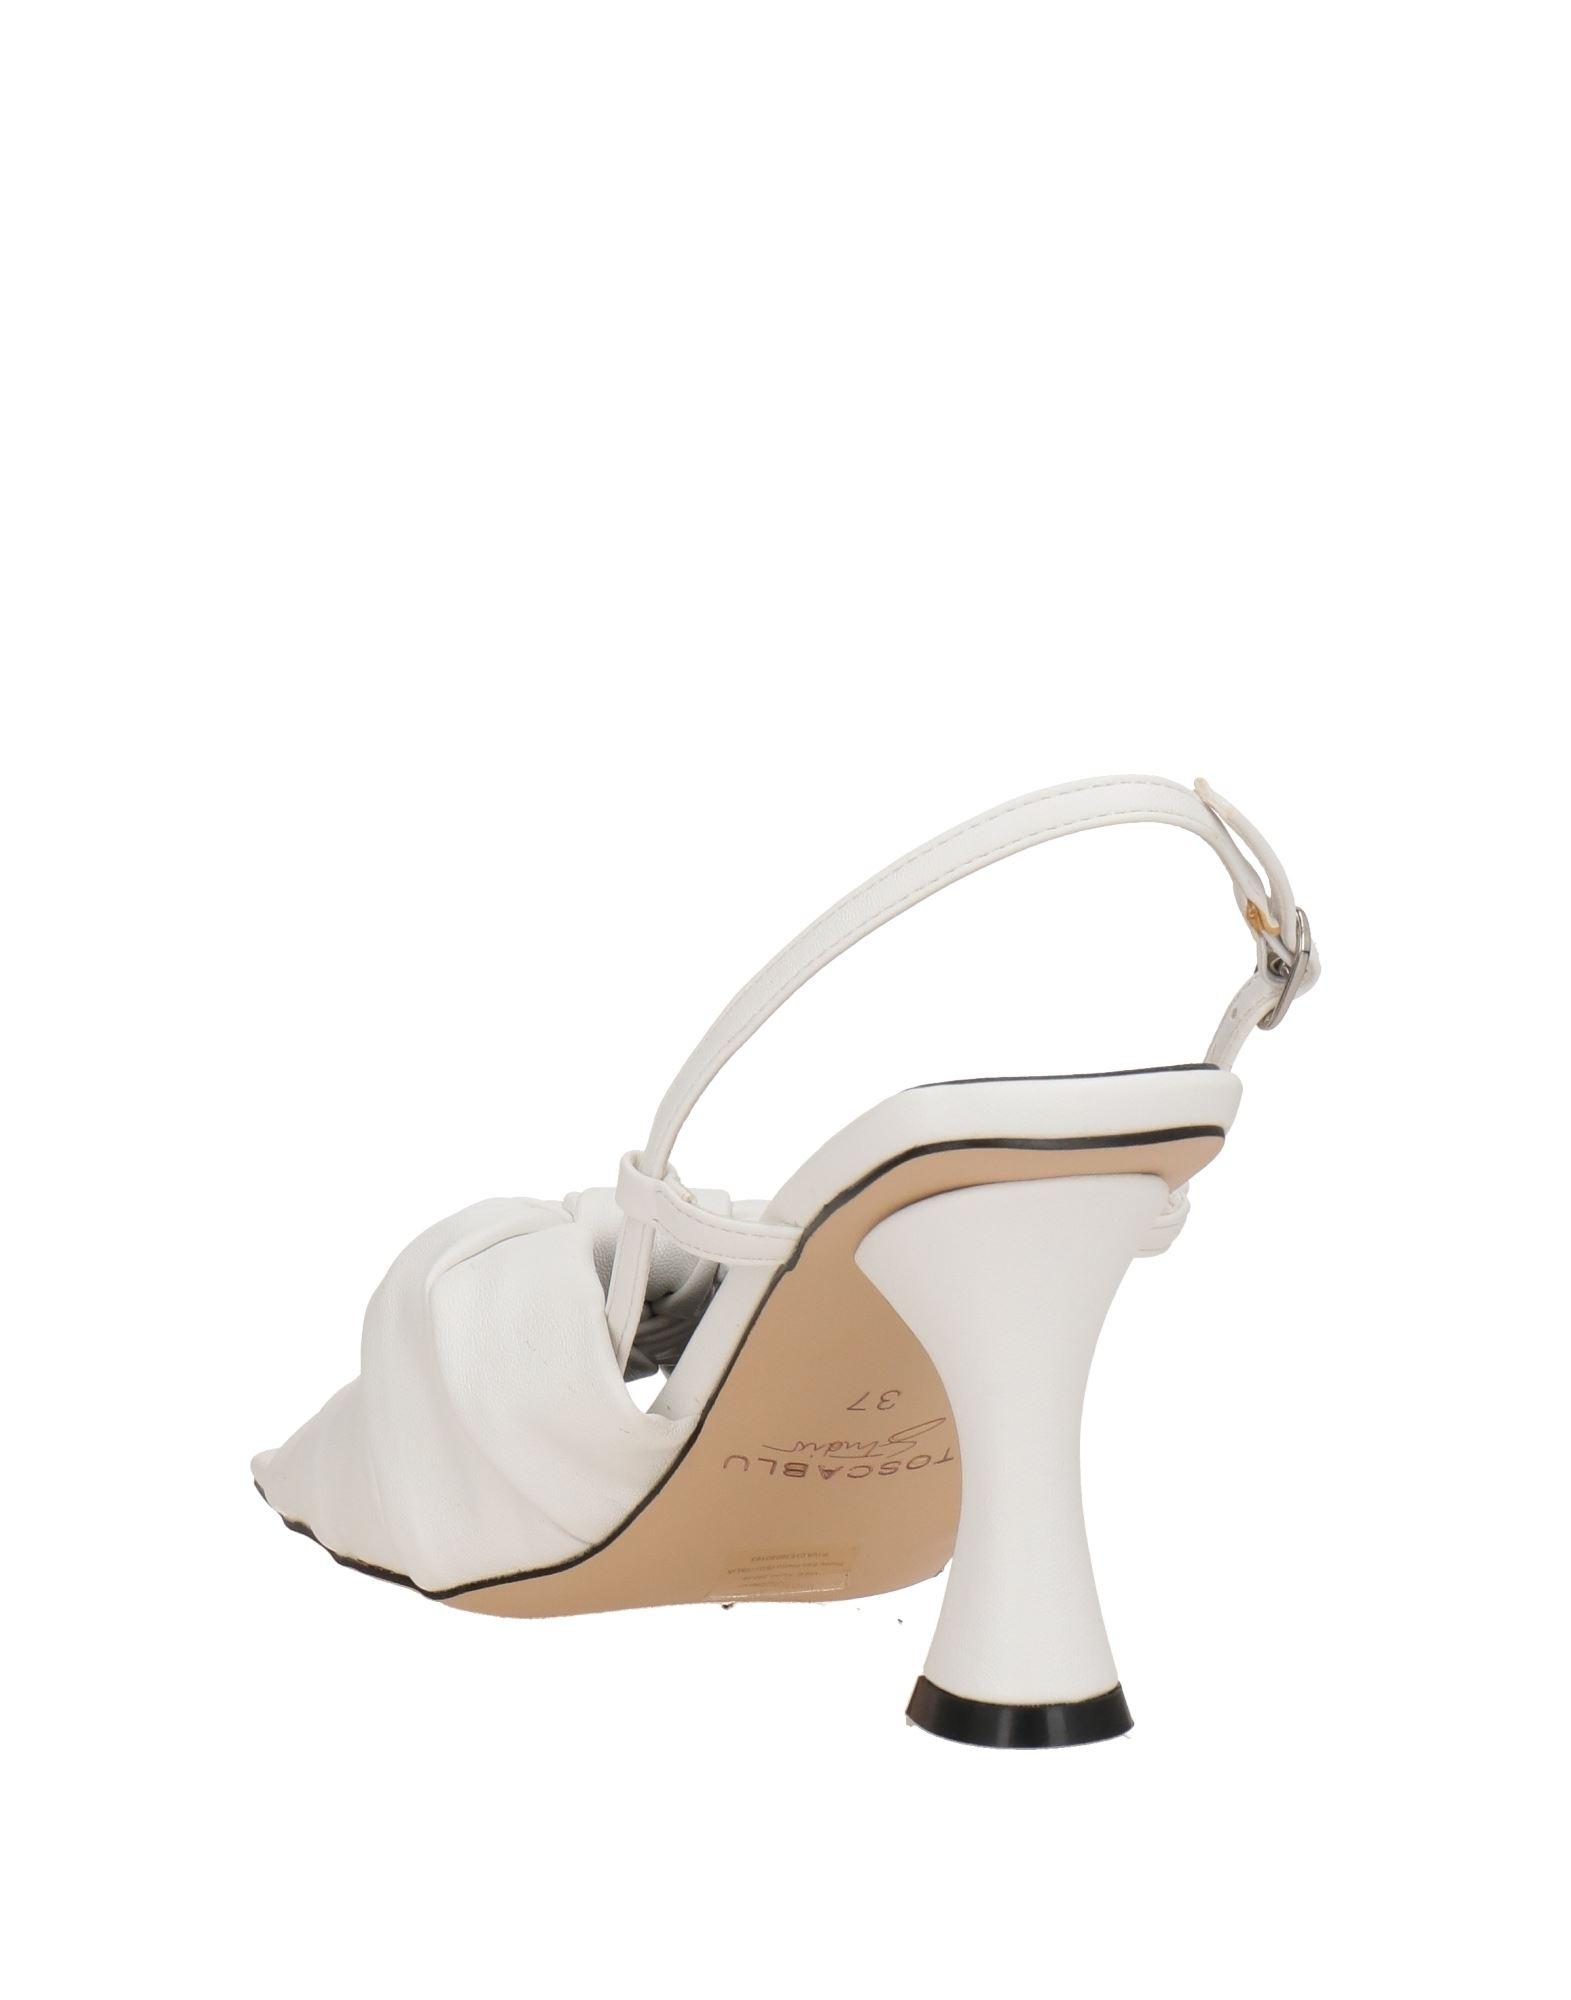 Tosca Blu Sandals in White | Lyst